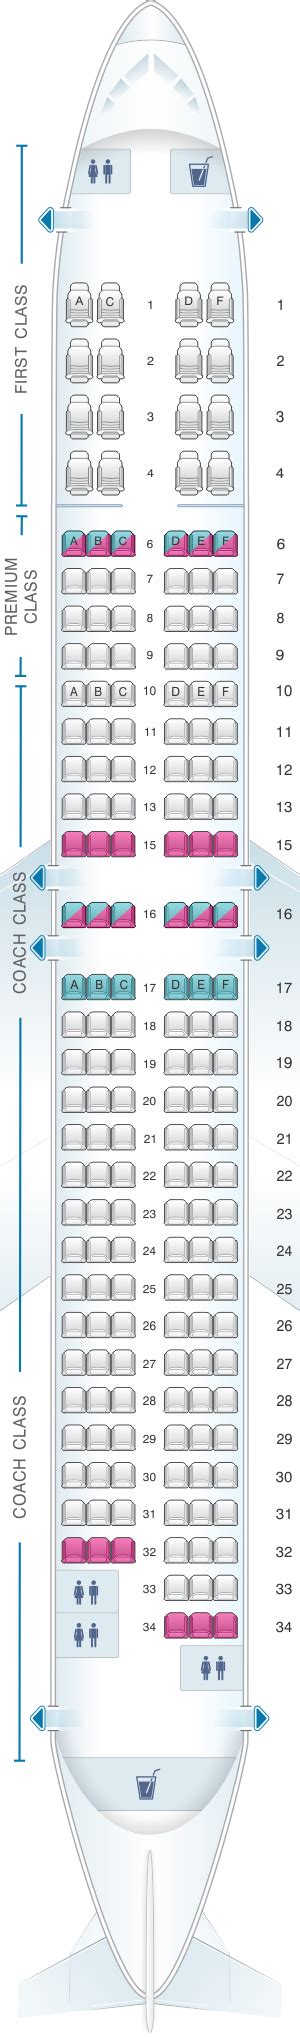 Alaska Airlines Er Seat Map Tutorial Pics